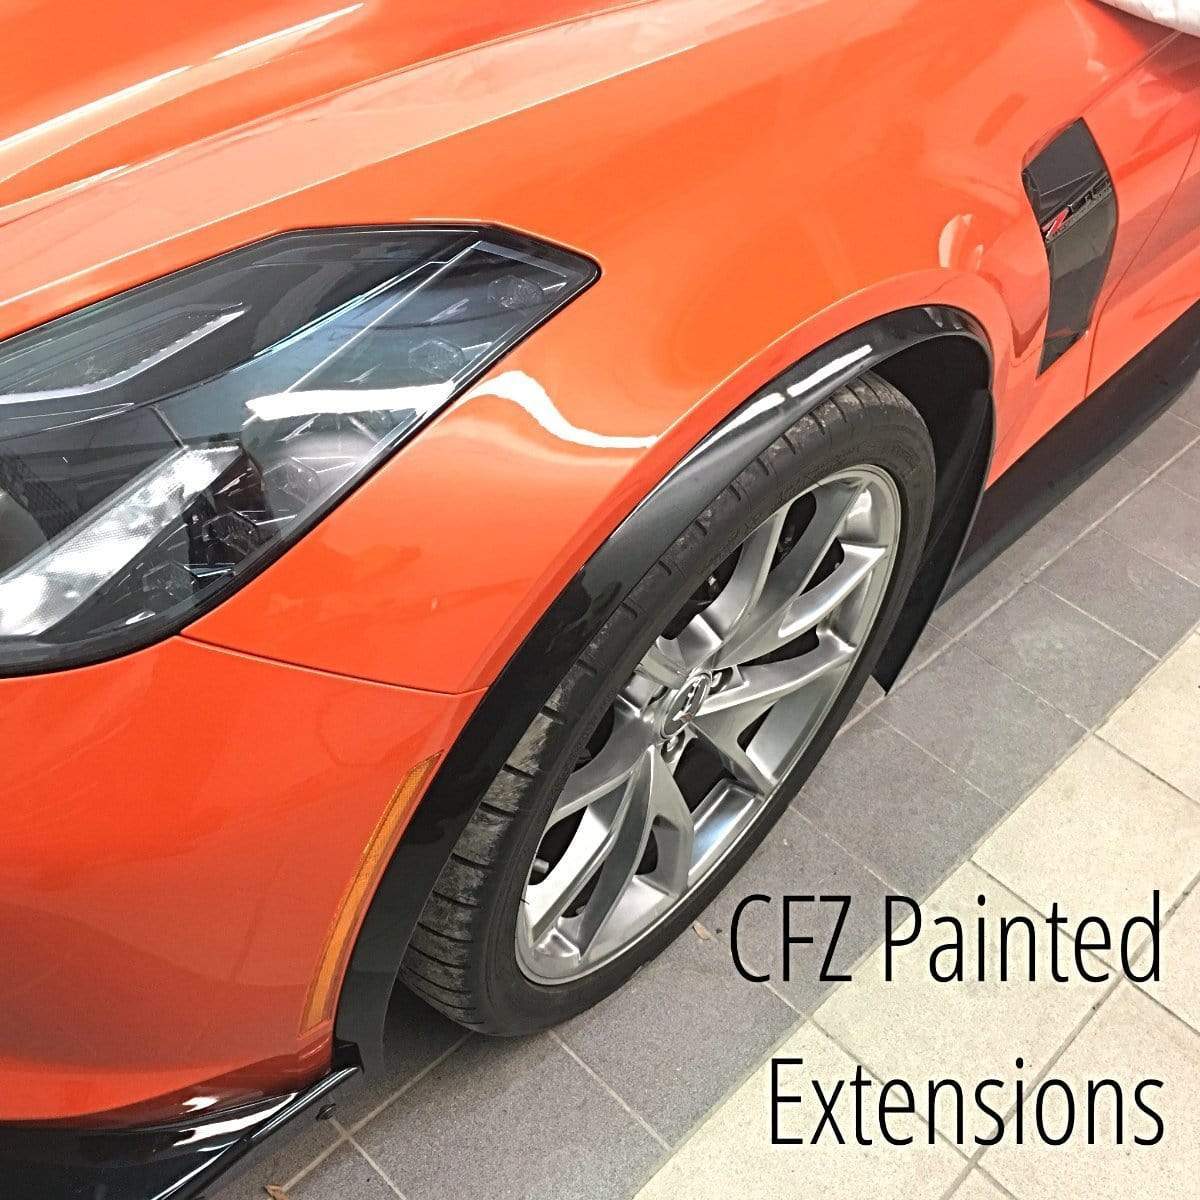 ACS Composite Front Fender Extensions in Carbon Flash Metallic Black for C7 Corvette Z06 & Grand Sport | SKU 45-4-207 CFZ Fender Flares